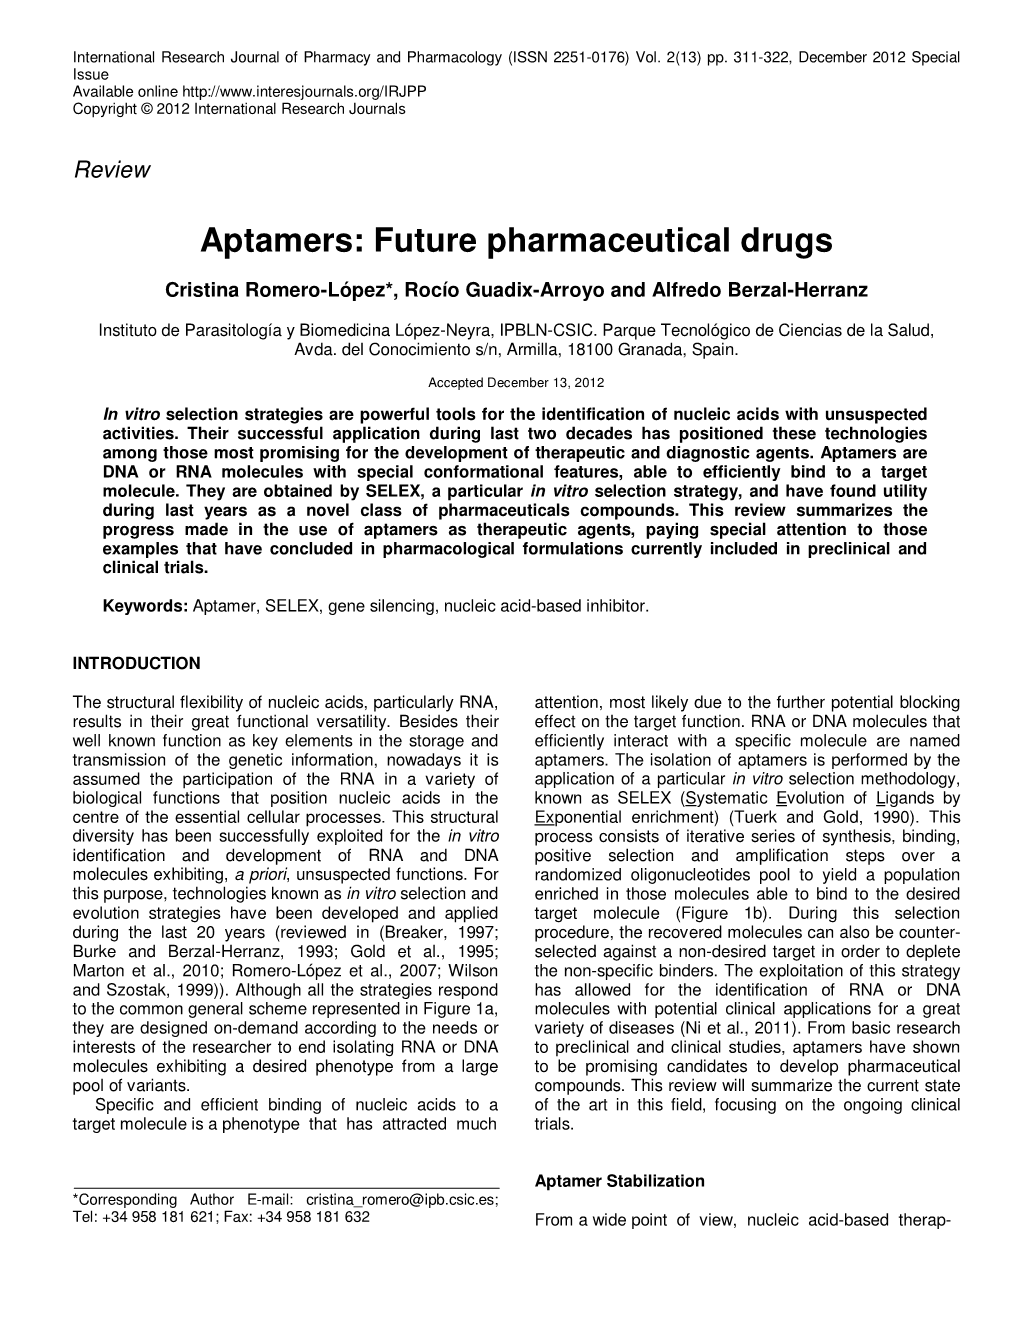 Aptamers: Future Pharmaceutical Drugs